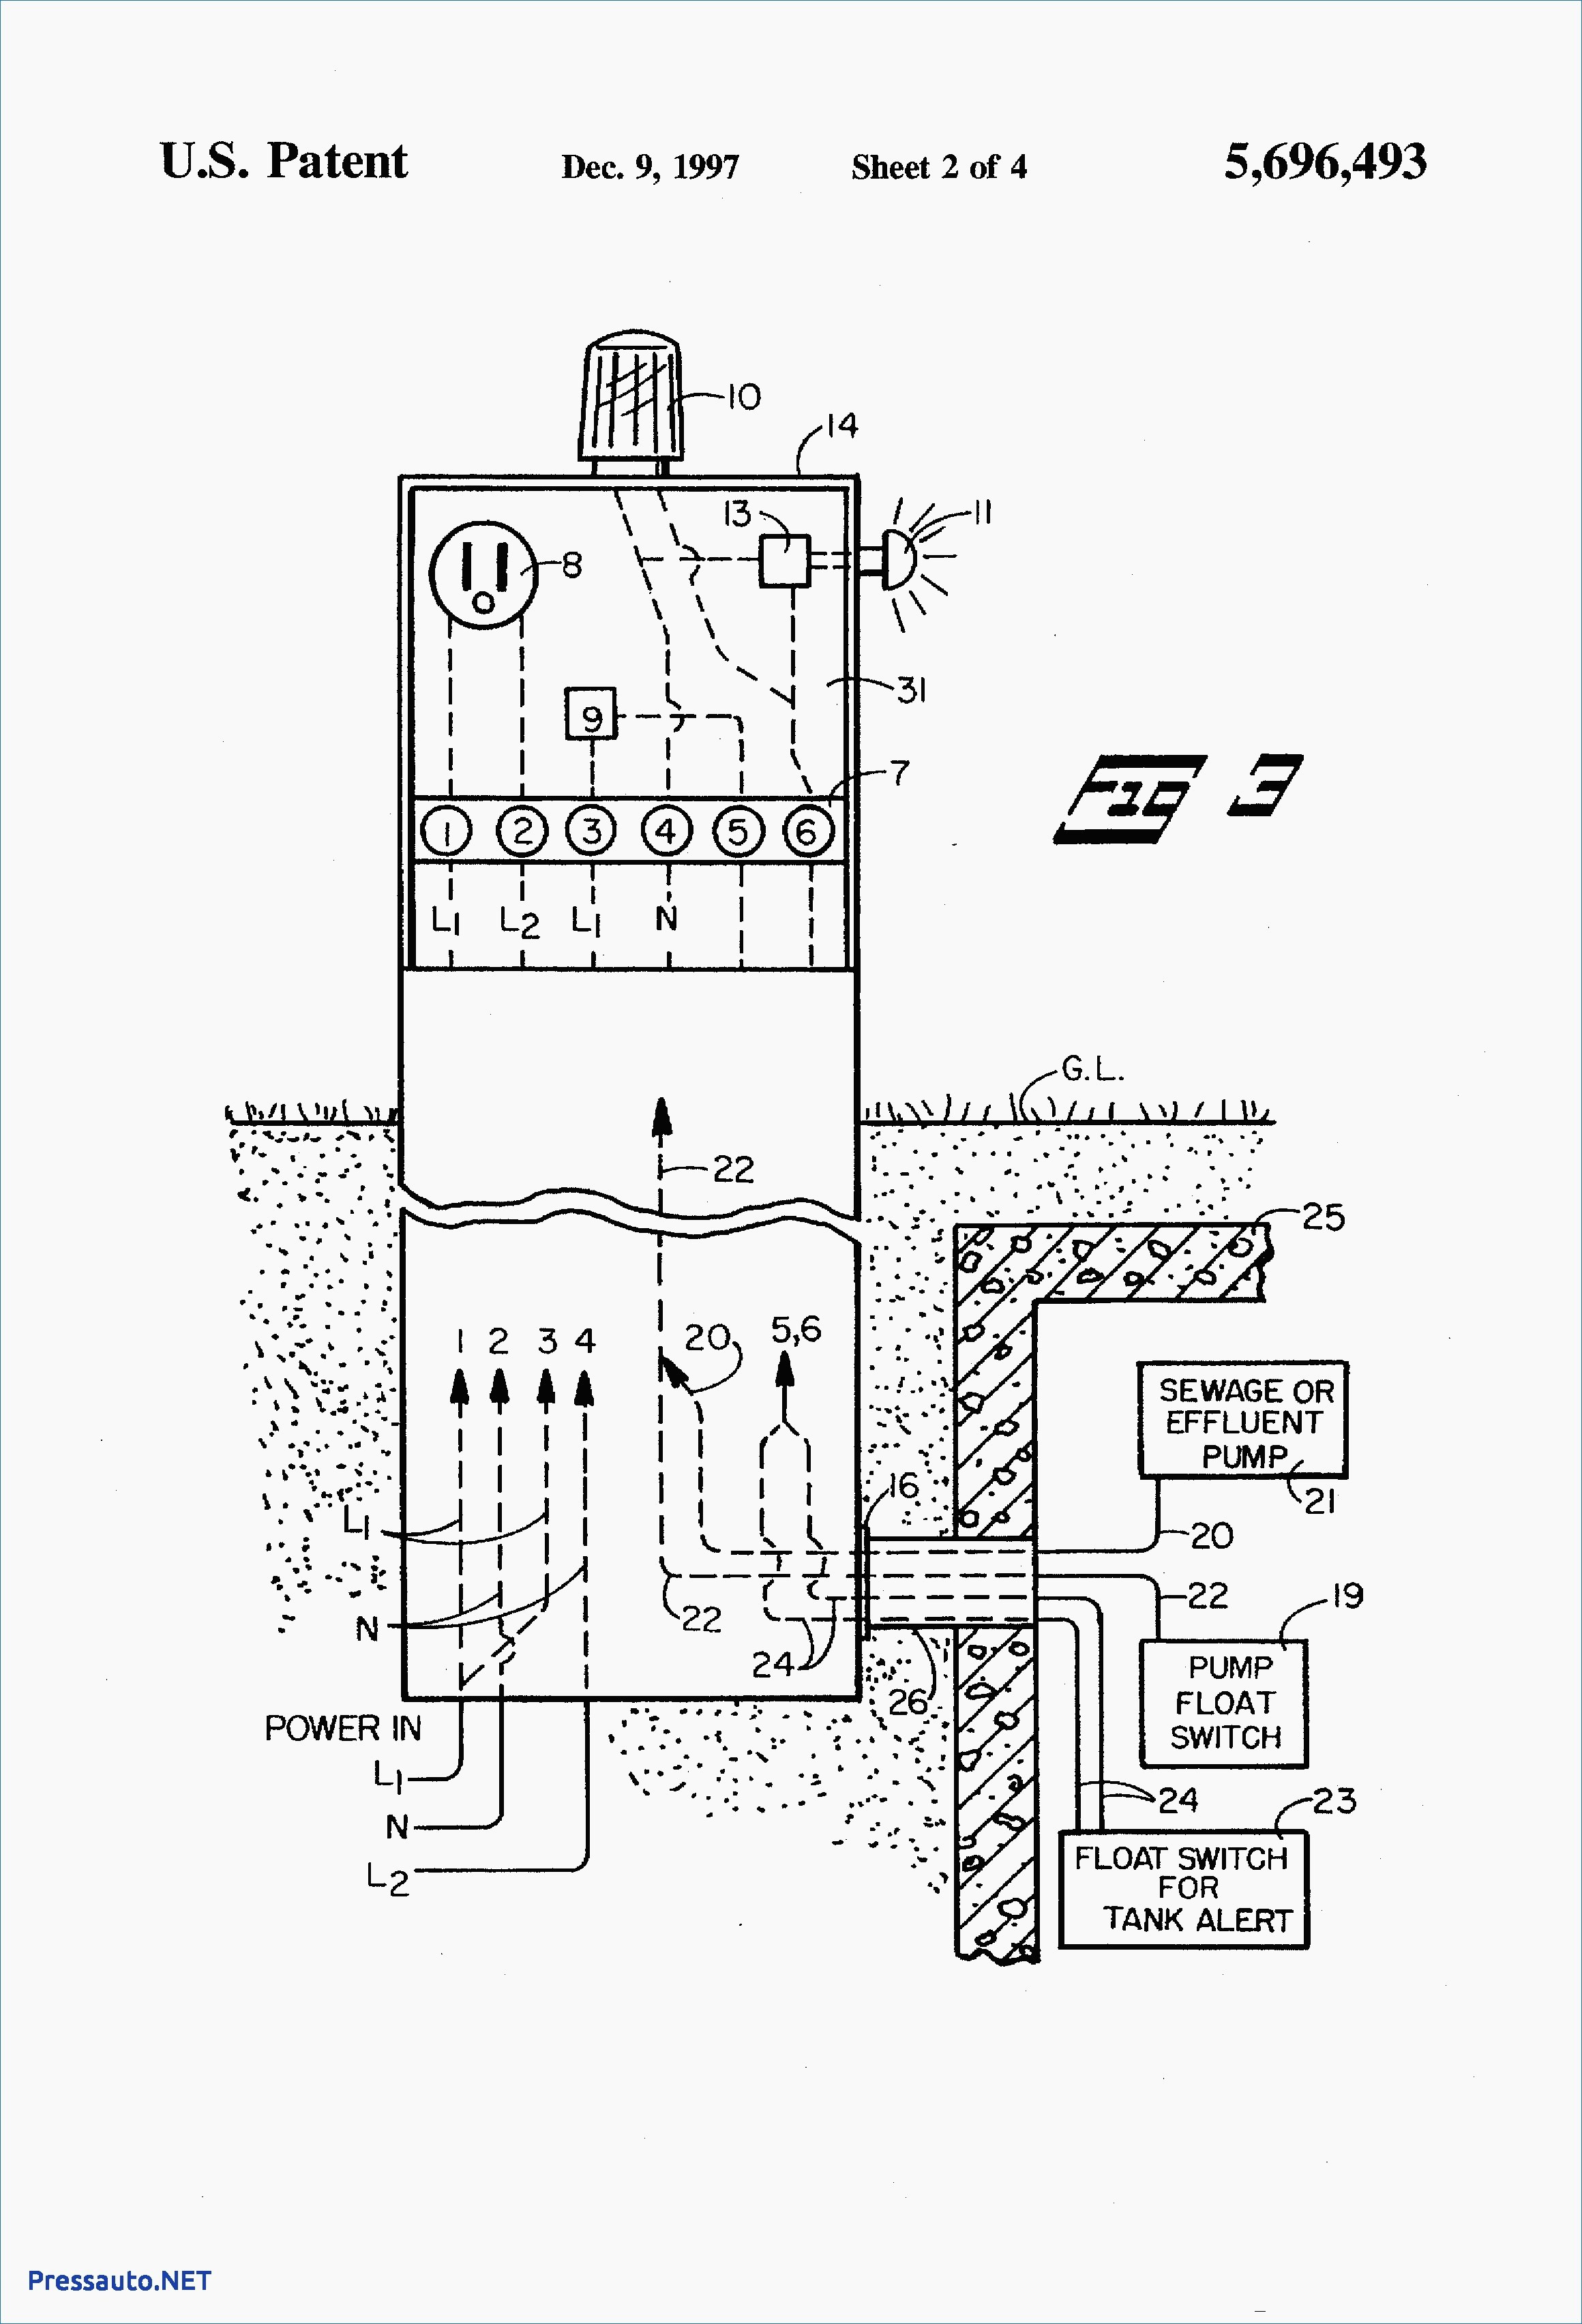 2 Wire Submersible Pump Wiring Diagram | Wiring Library - 2 Wire Submersible Well Pump Wiring Diagram